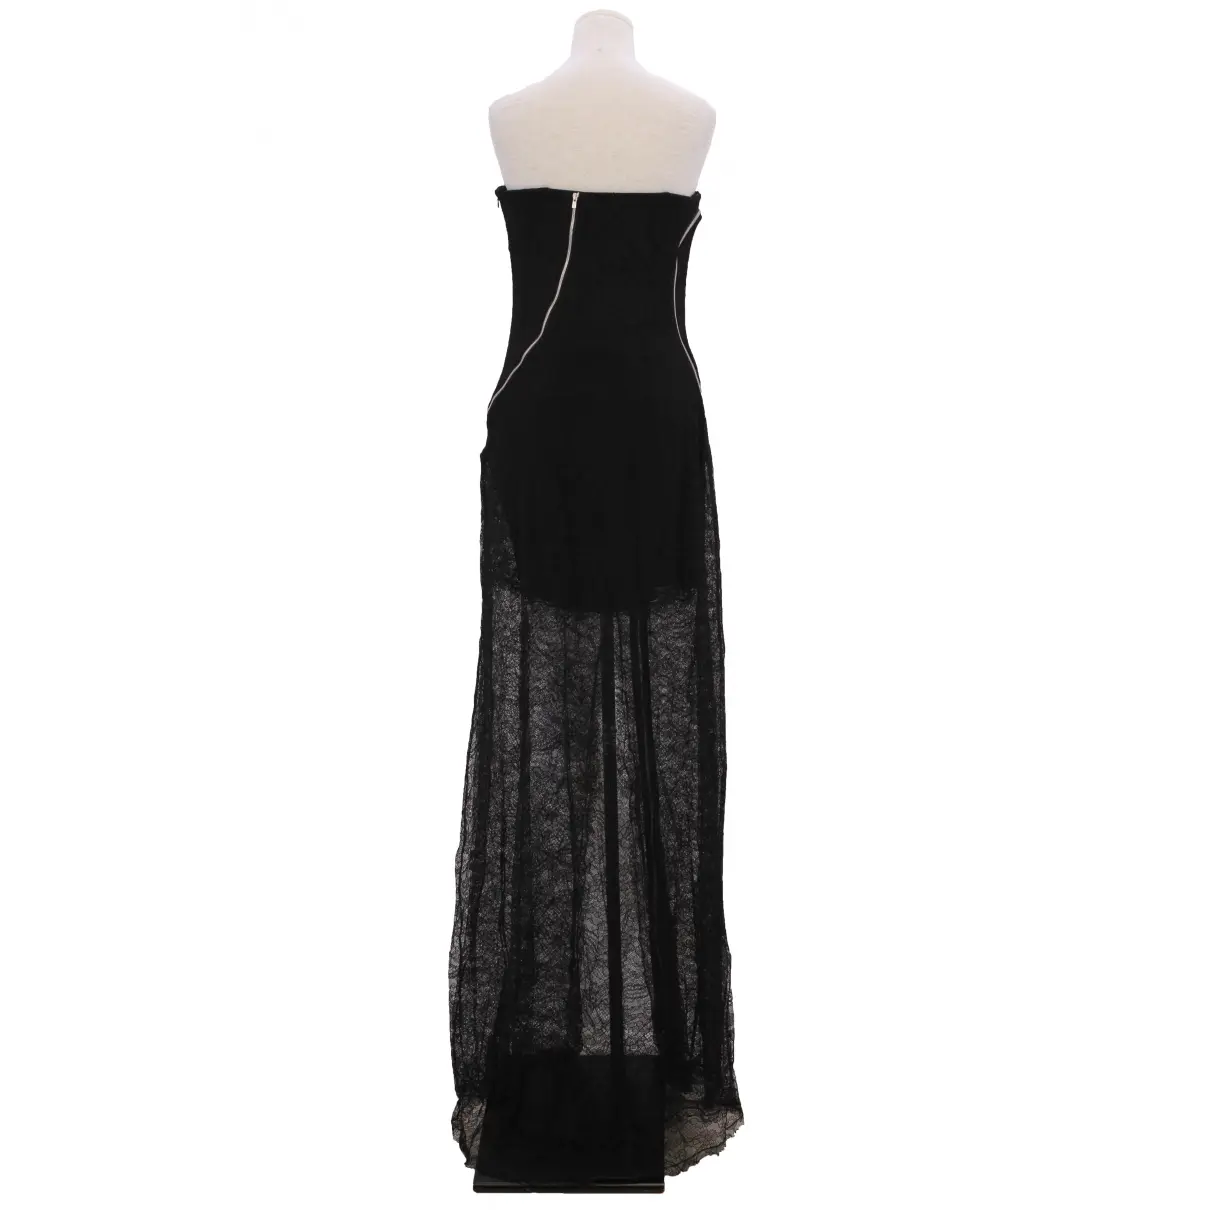 Buy Jay Ahr Maxi dress online